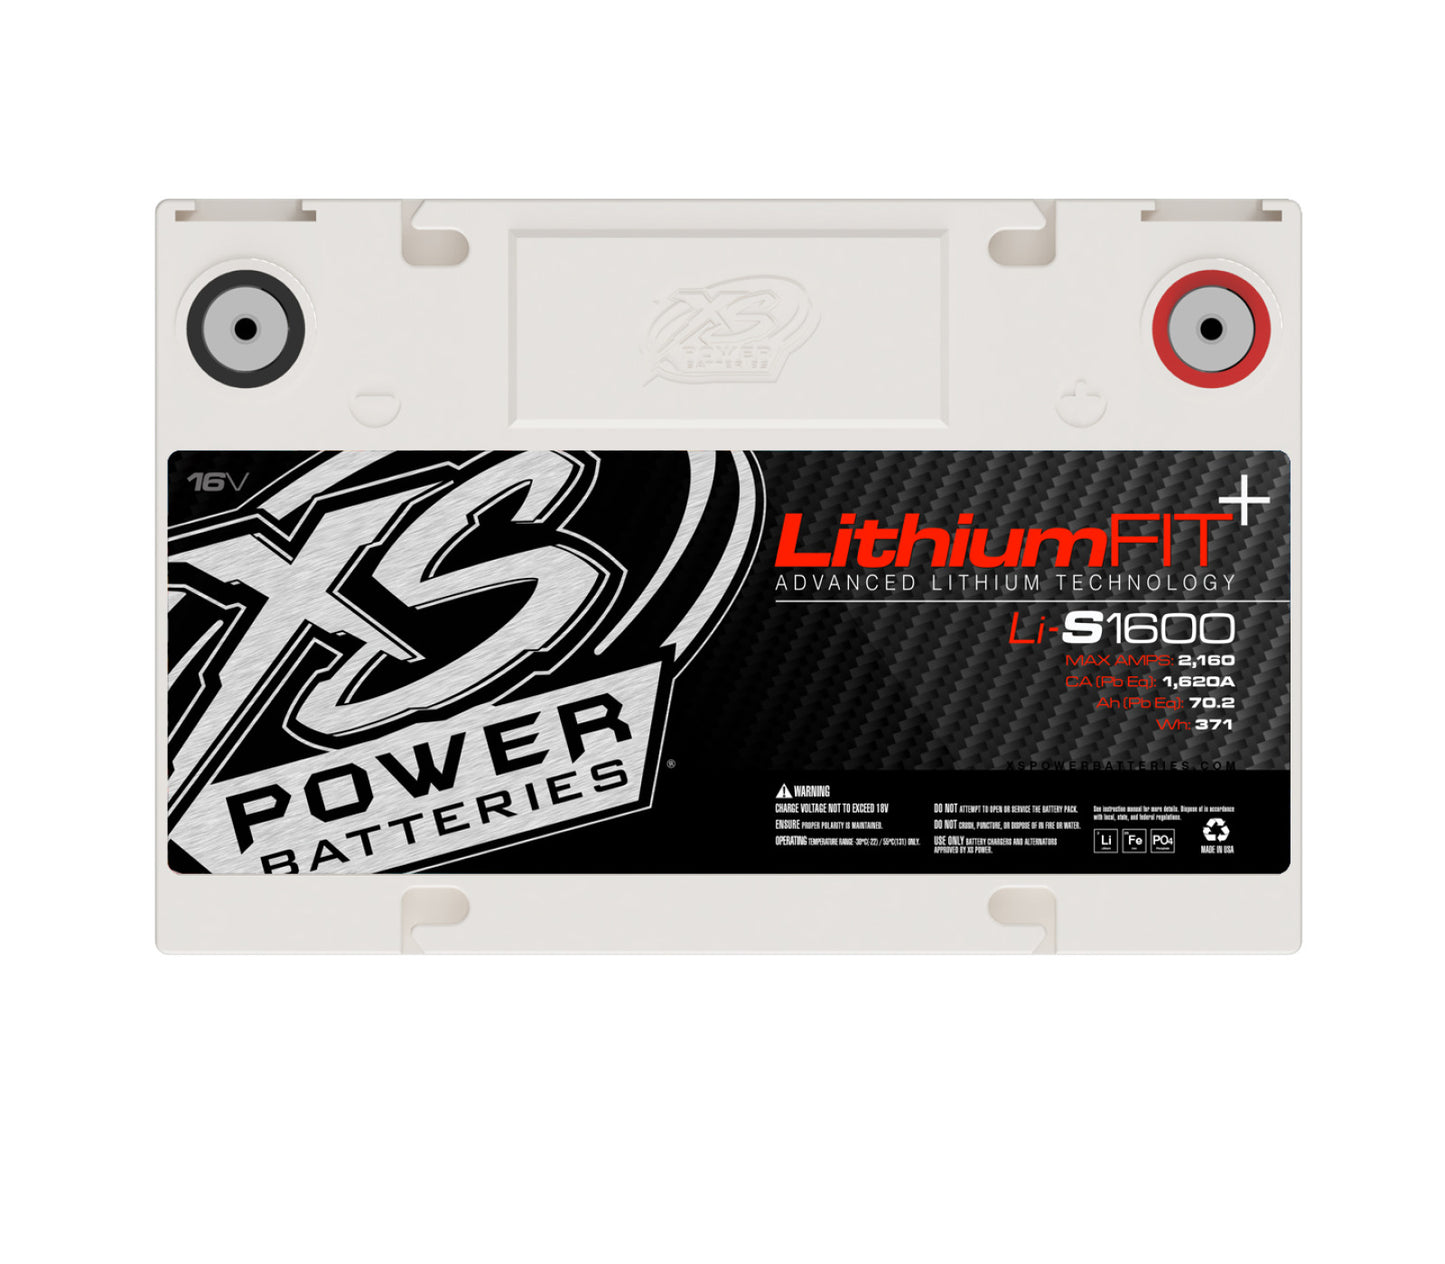 XS Power Batteries Lithium Racing 16V Batteries - Stud Adaptors/Terminal Bolts Included 2160 Max Amps Li-S1600